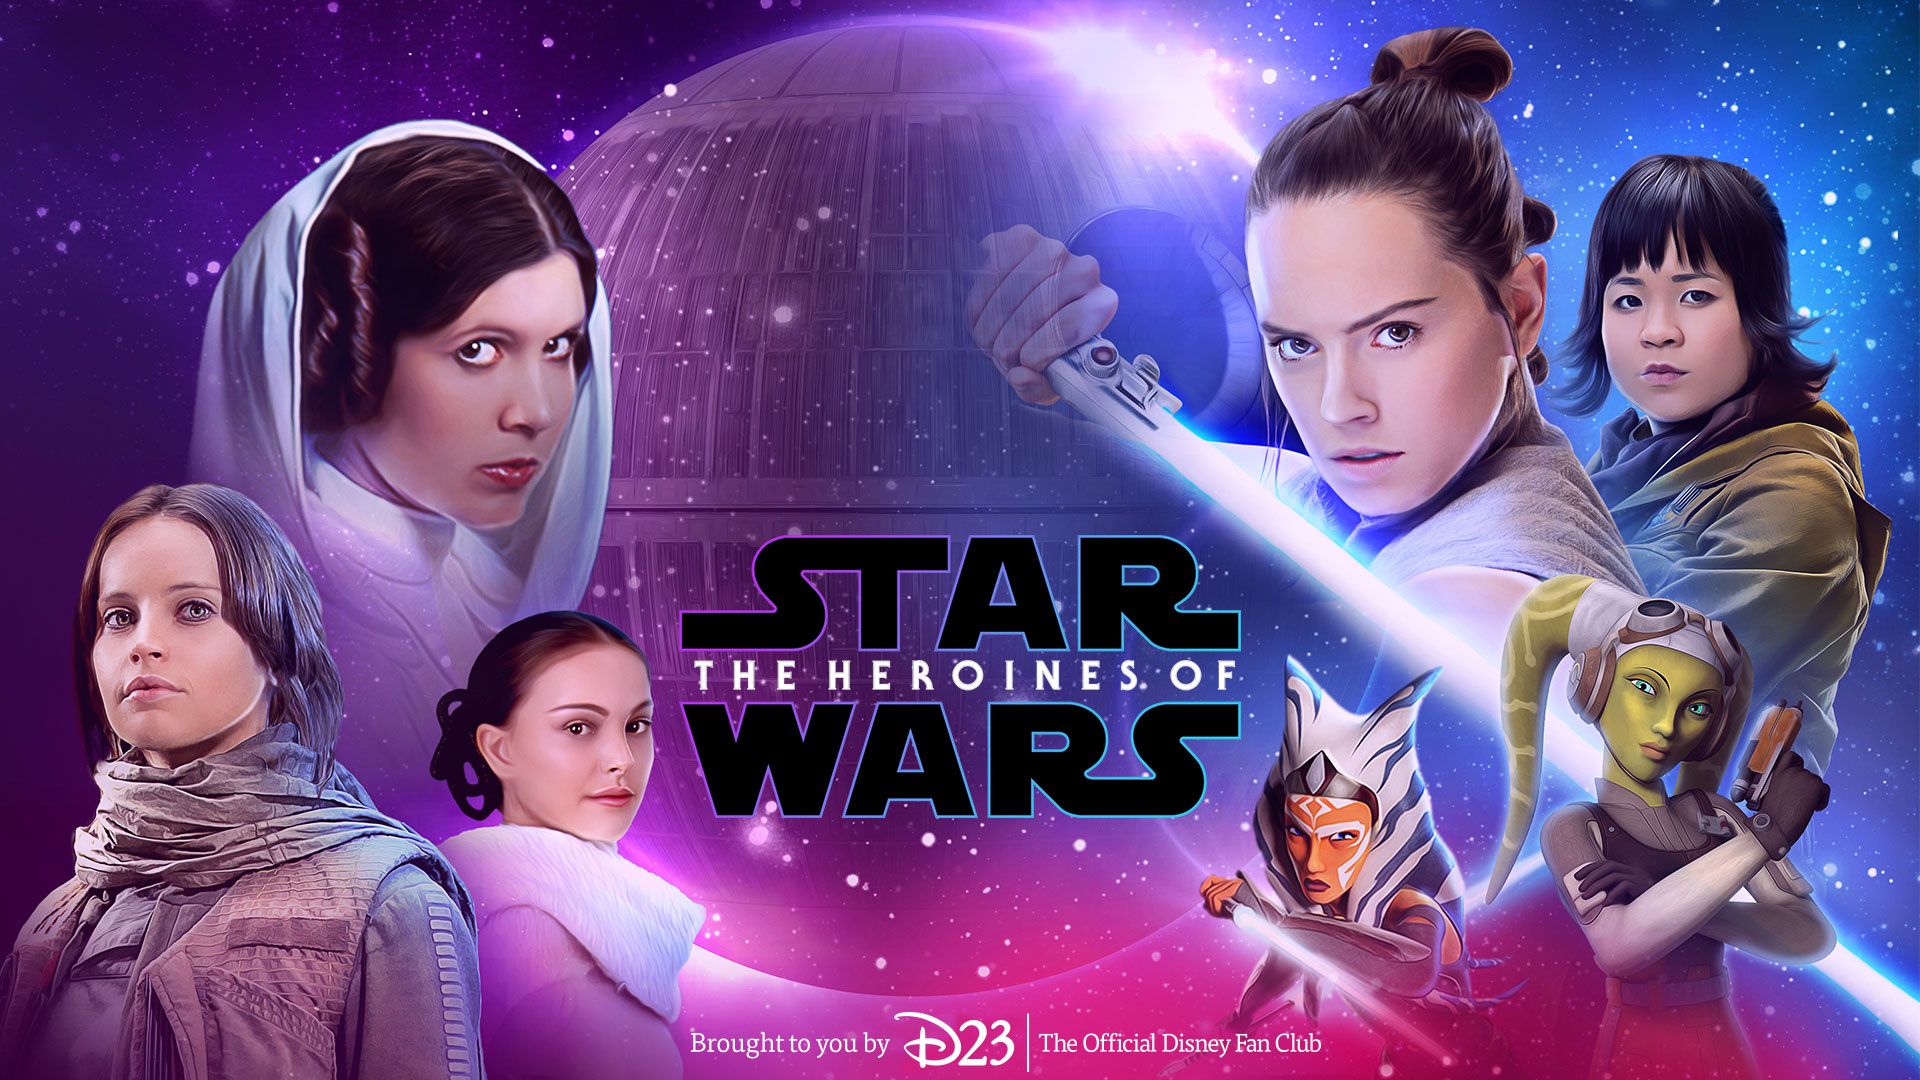 Star Wars Heroines Wallpaper for Your Desktop, Tablet or Phone